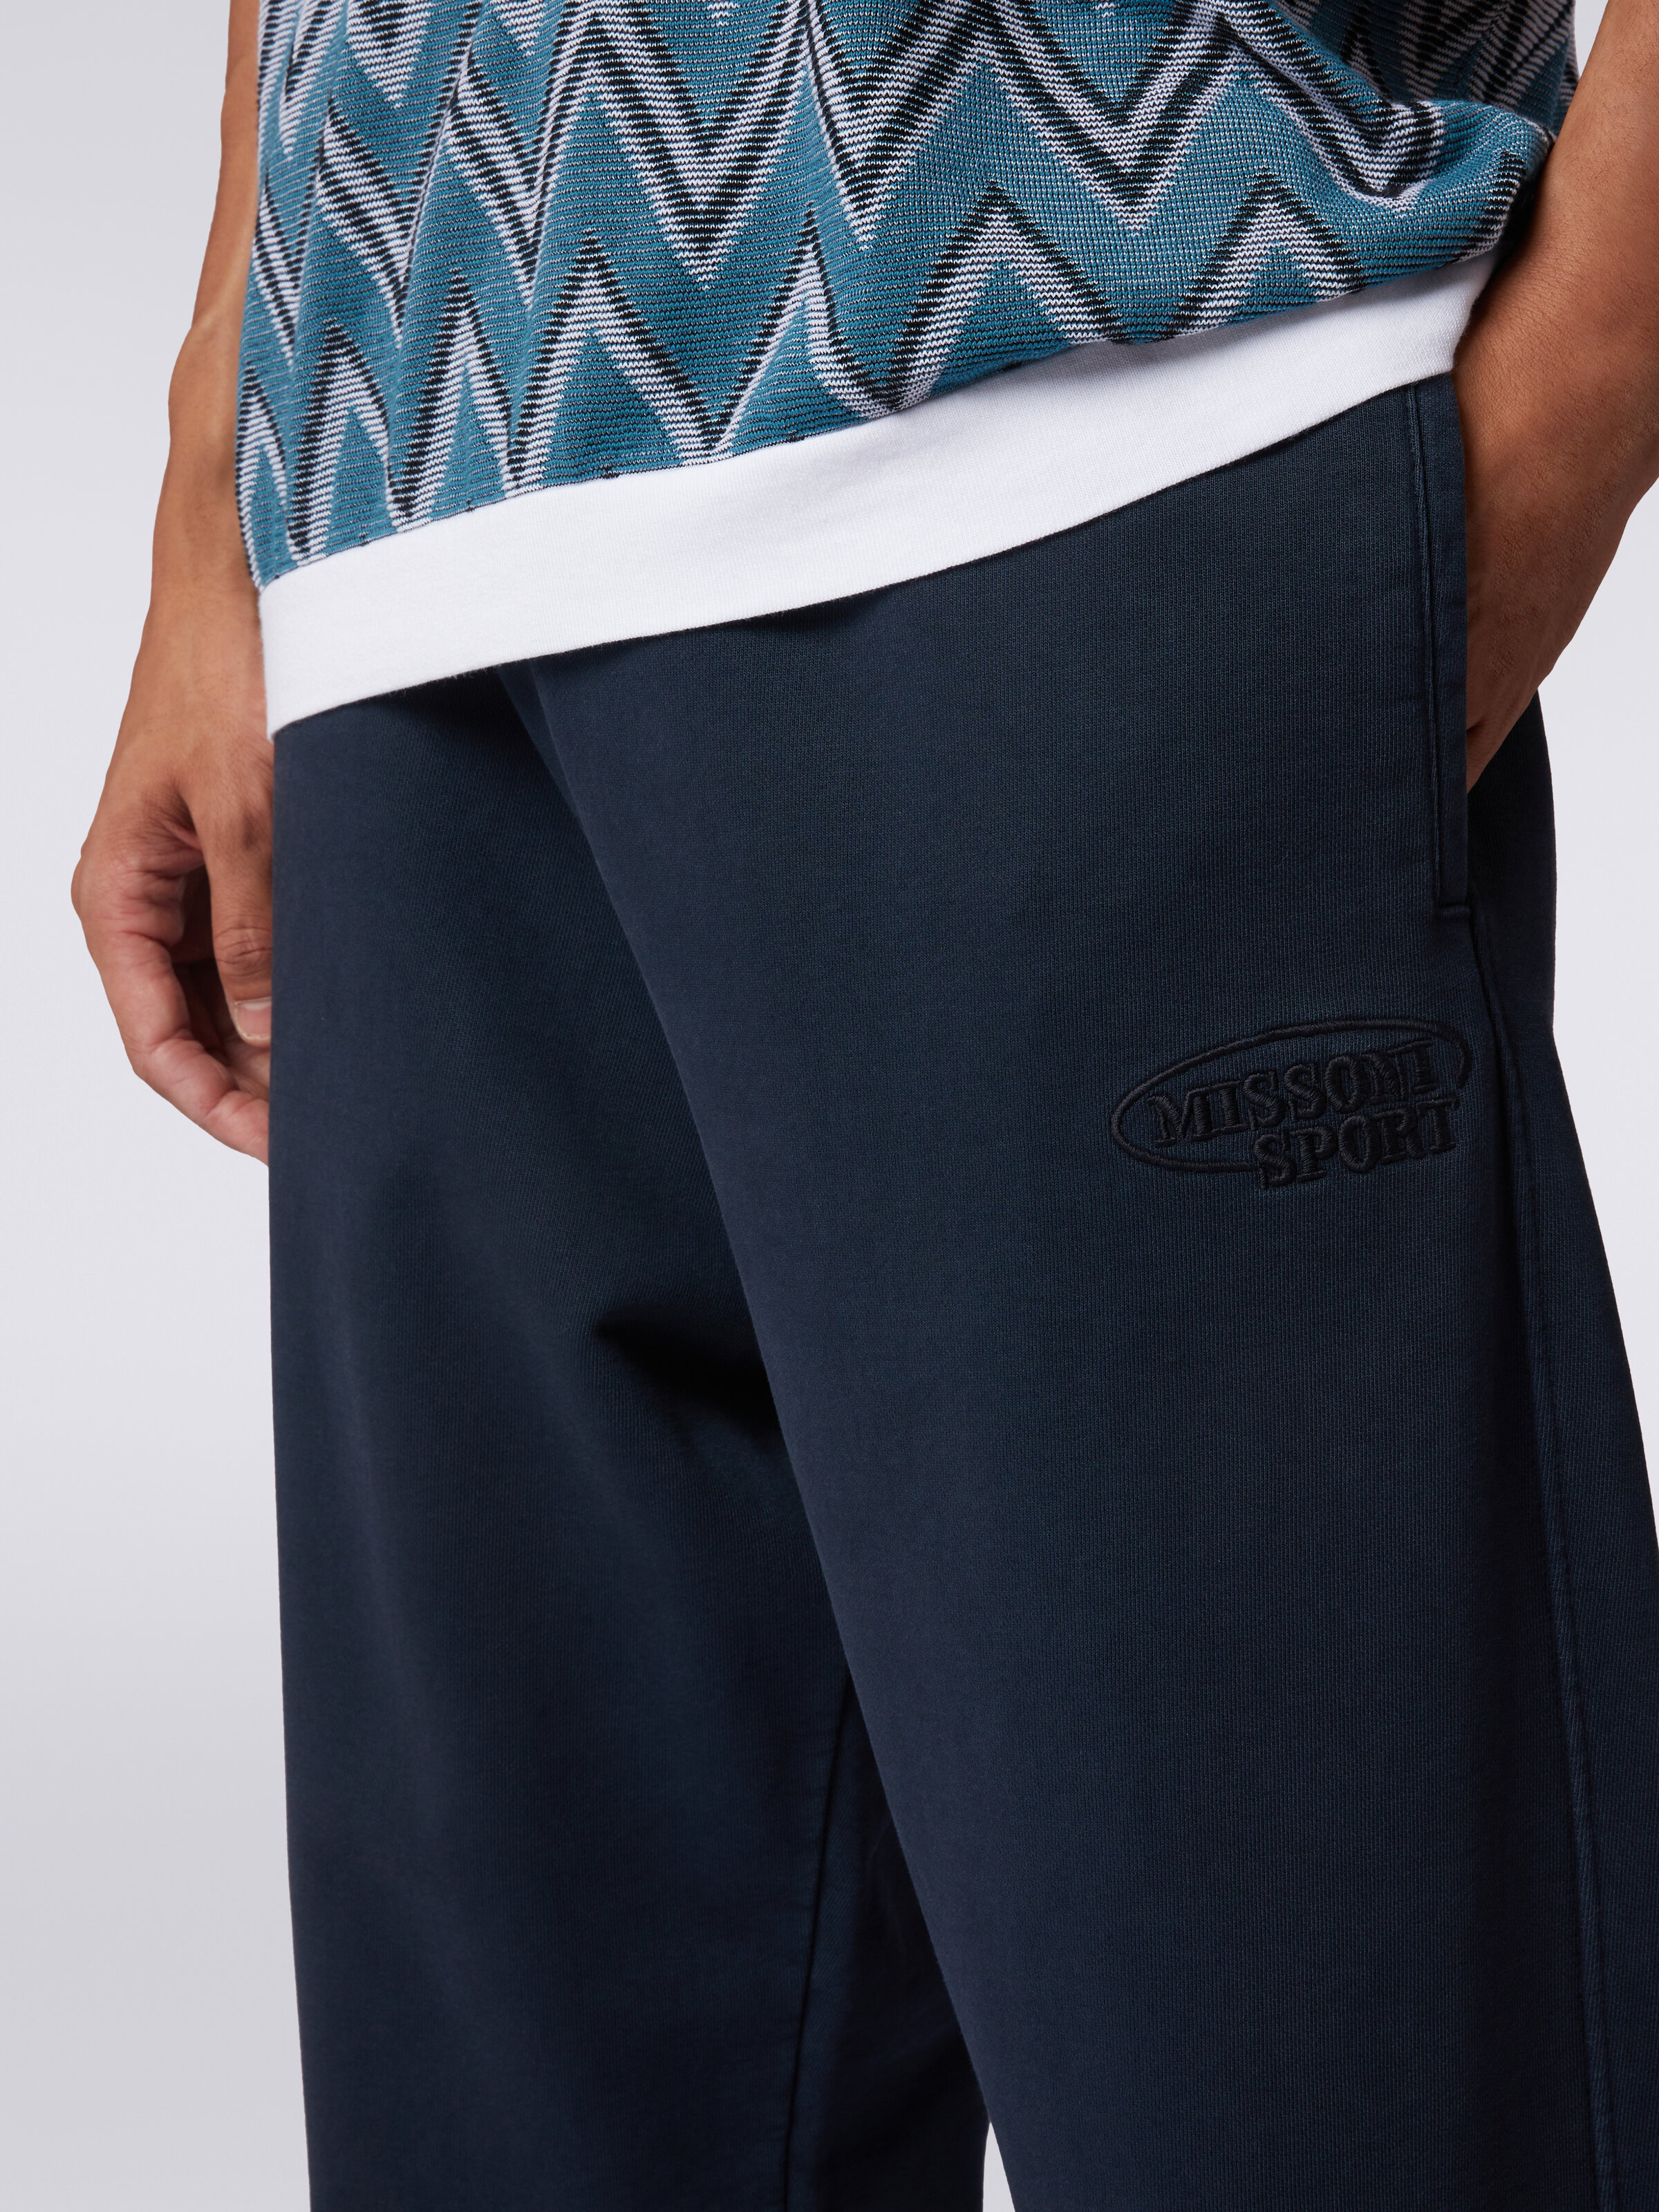 Hose aus Baumwollsweat mit Logo, Marineblau  - 4